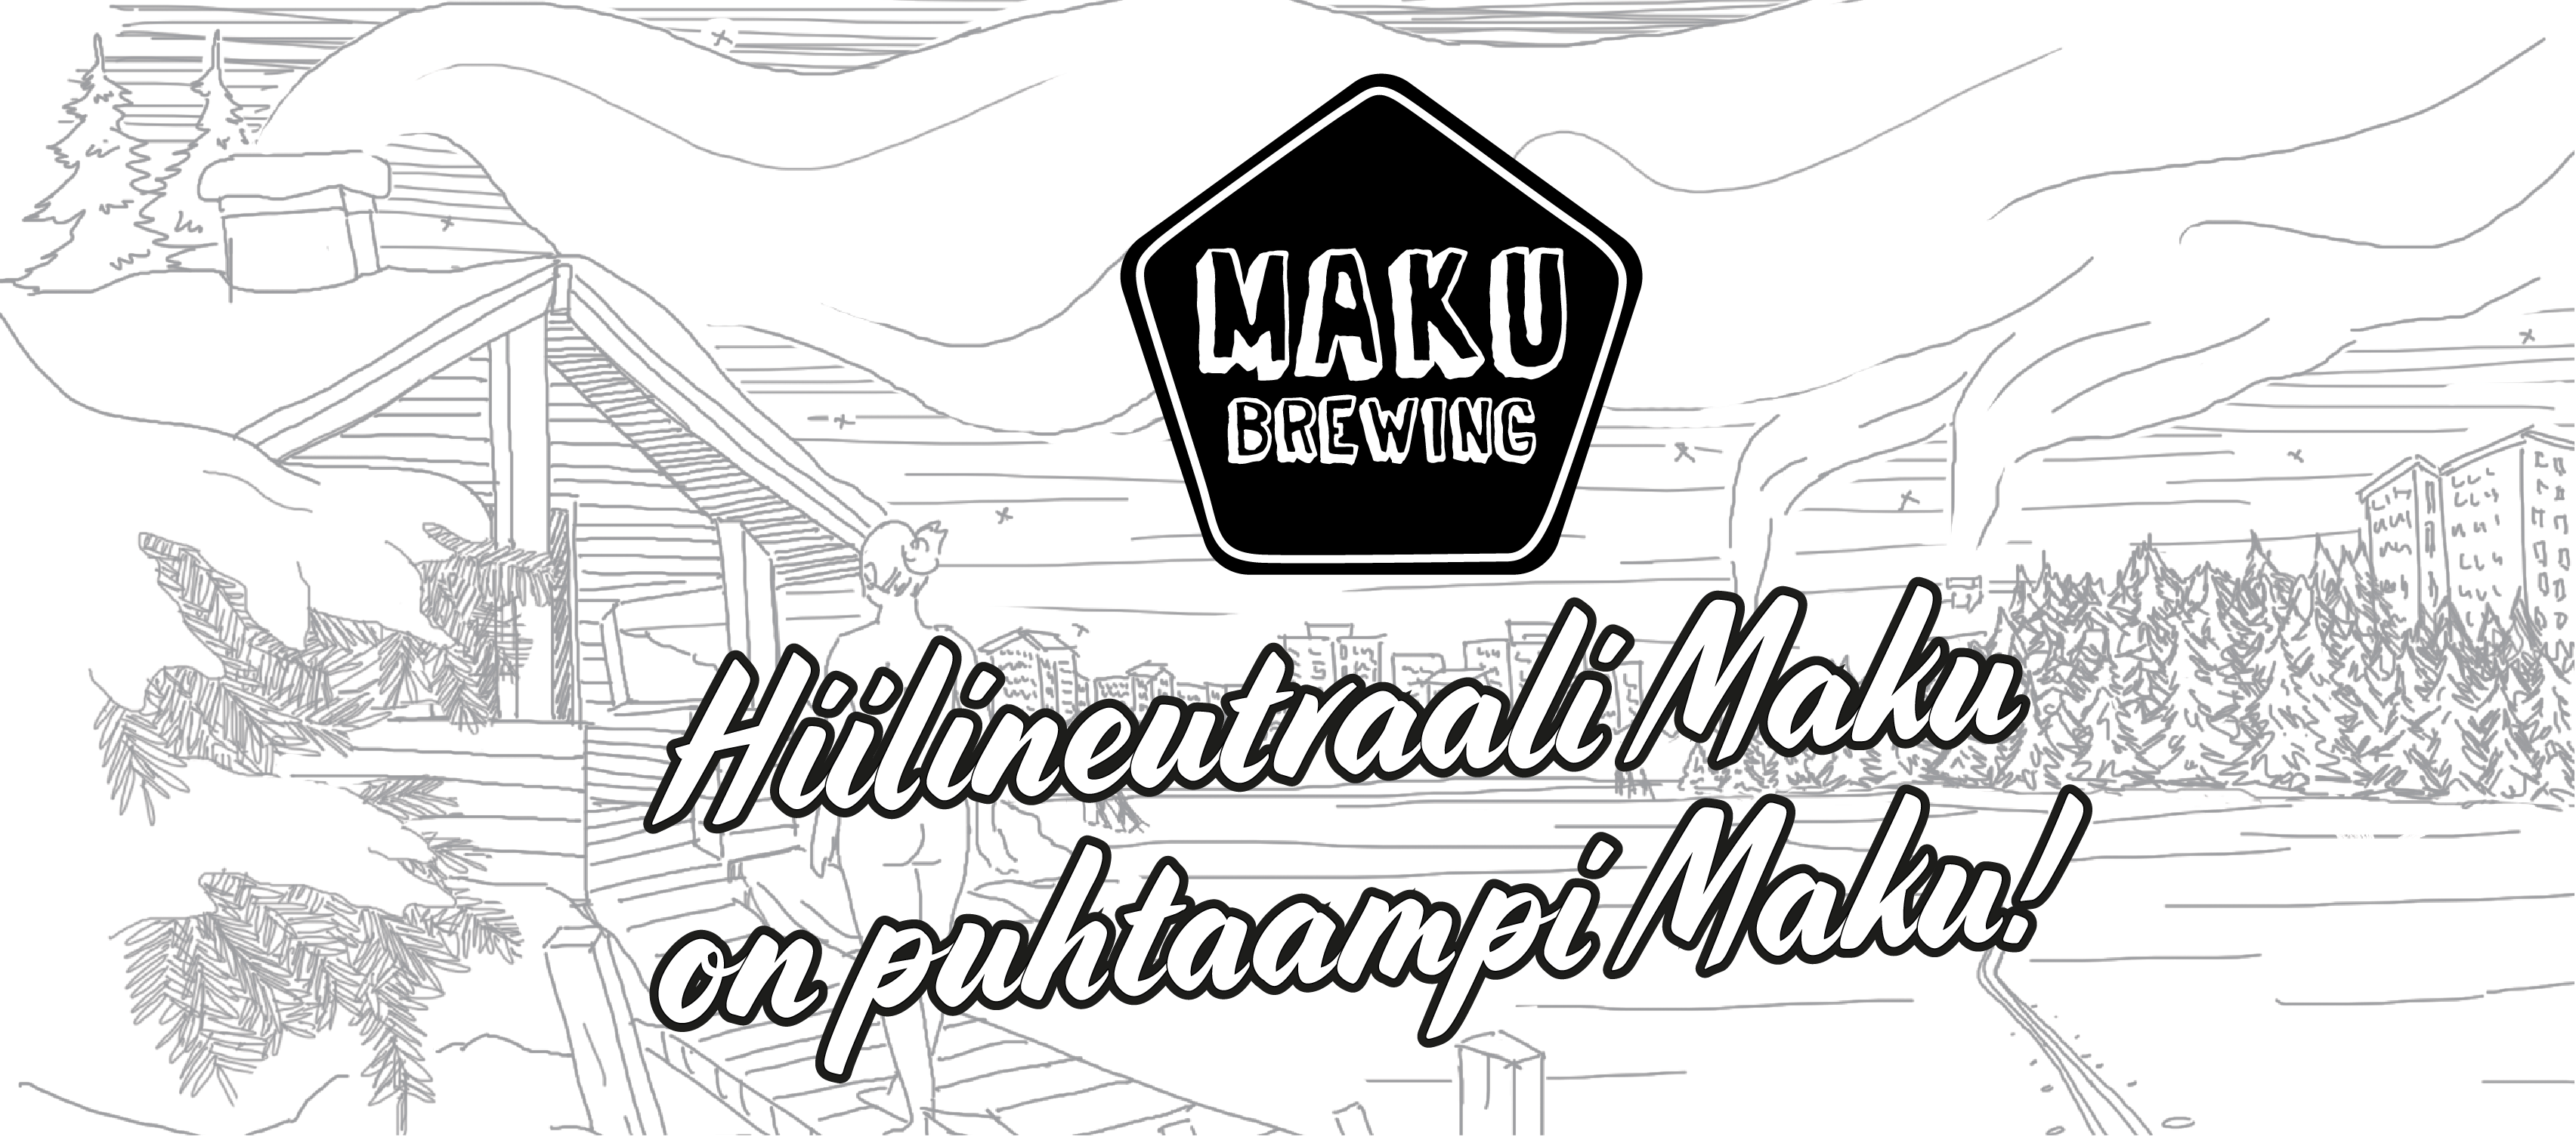 Maku Brewing is carbon neutral